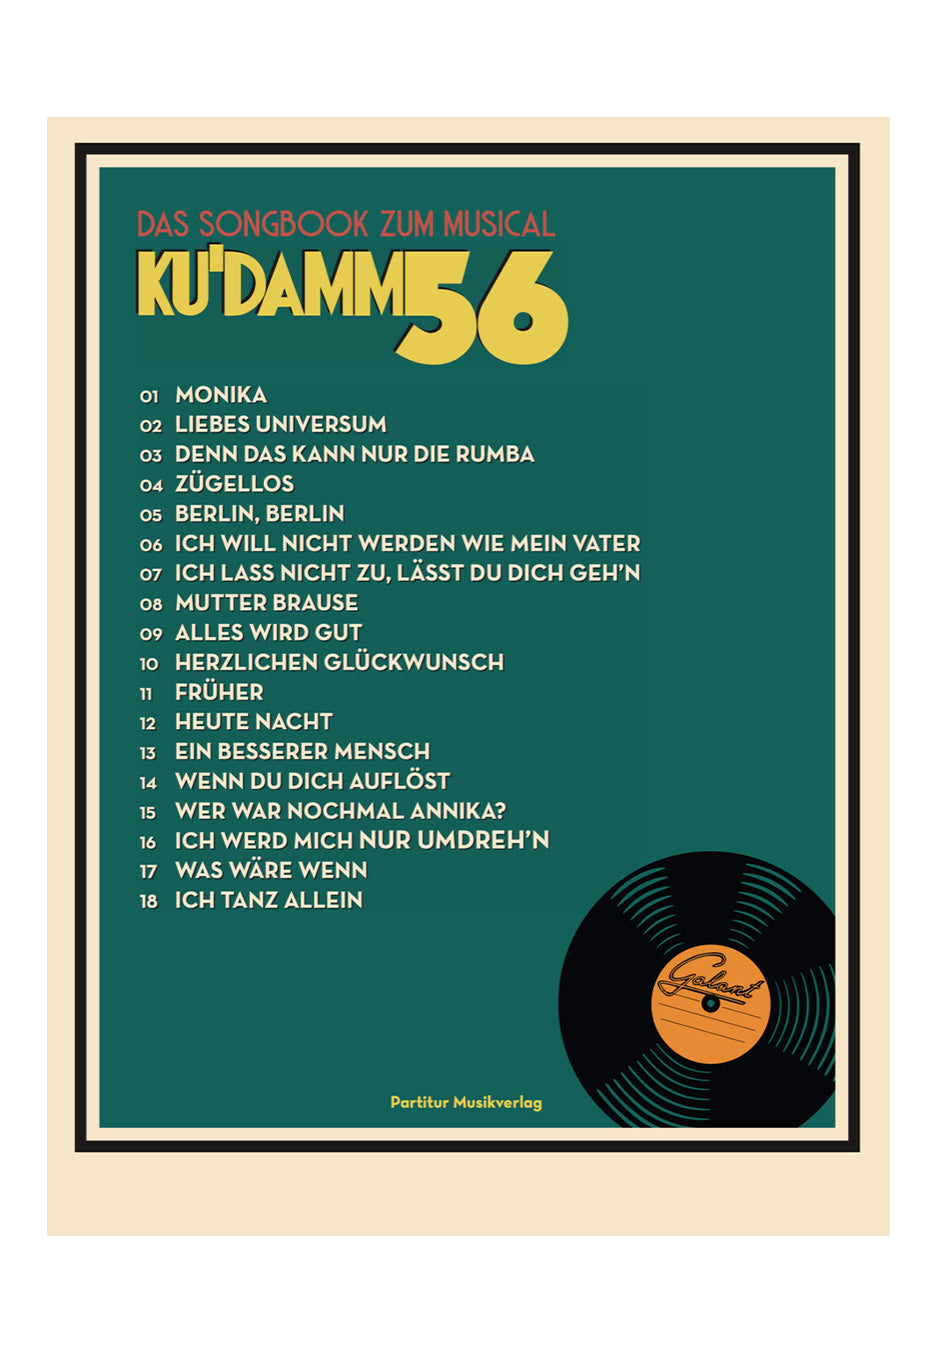 Ku'Damm 56 - Das Musical - Songbook